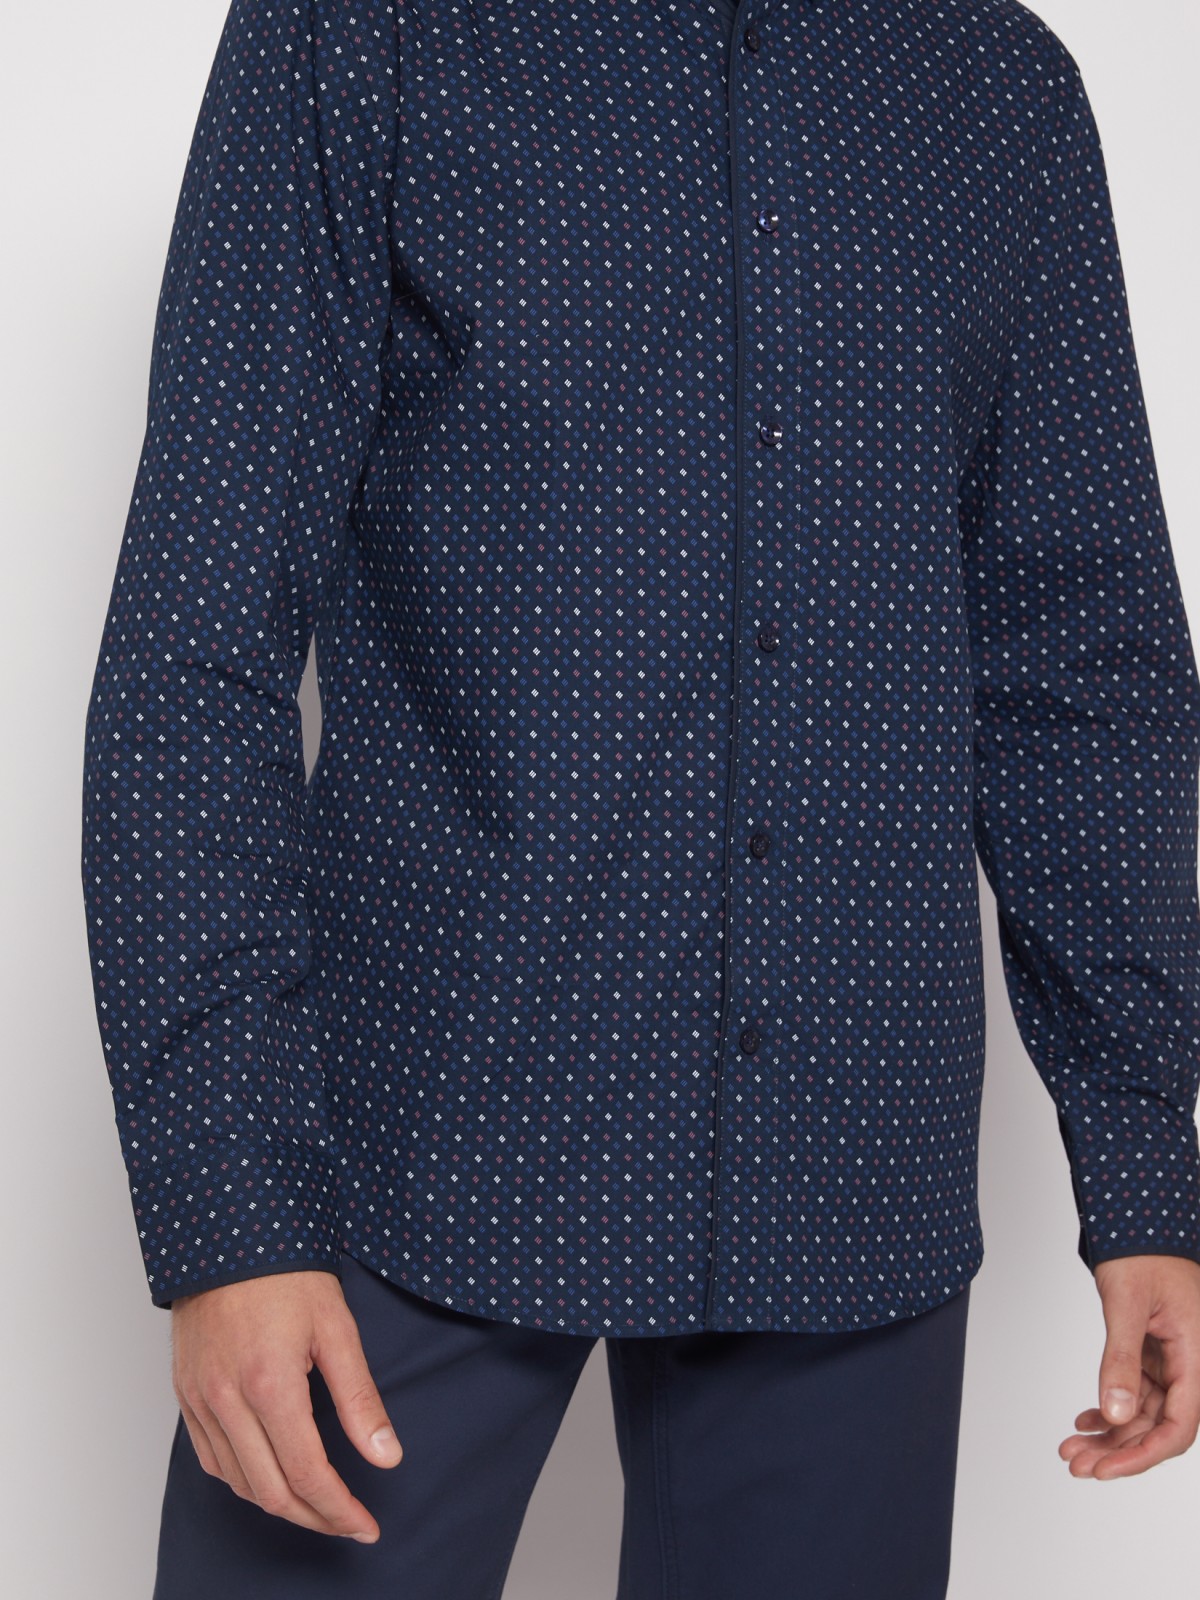 Хлопковая рубашка с мелким принтом zolla 011452159043, цвет темно-синий, размер M - фото 4